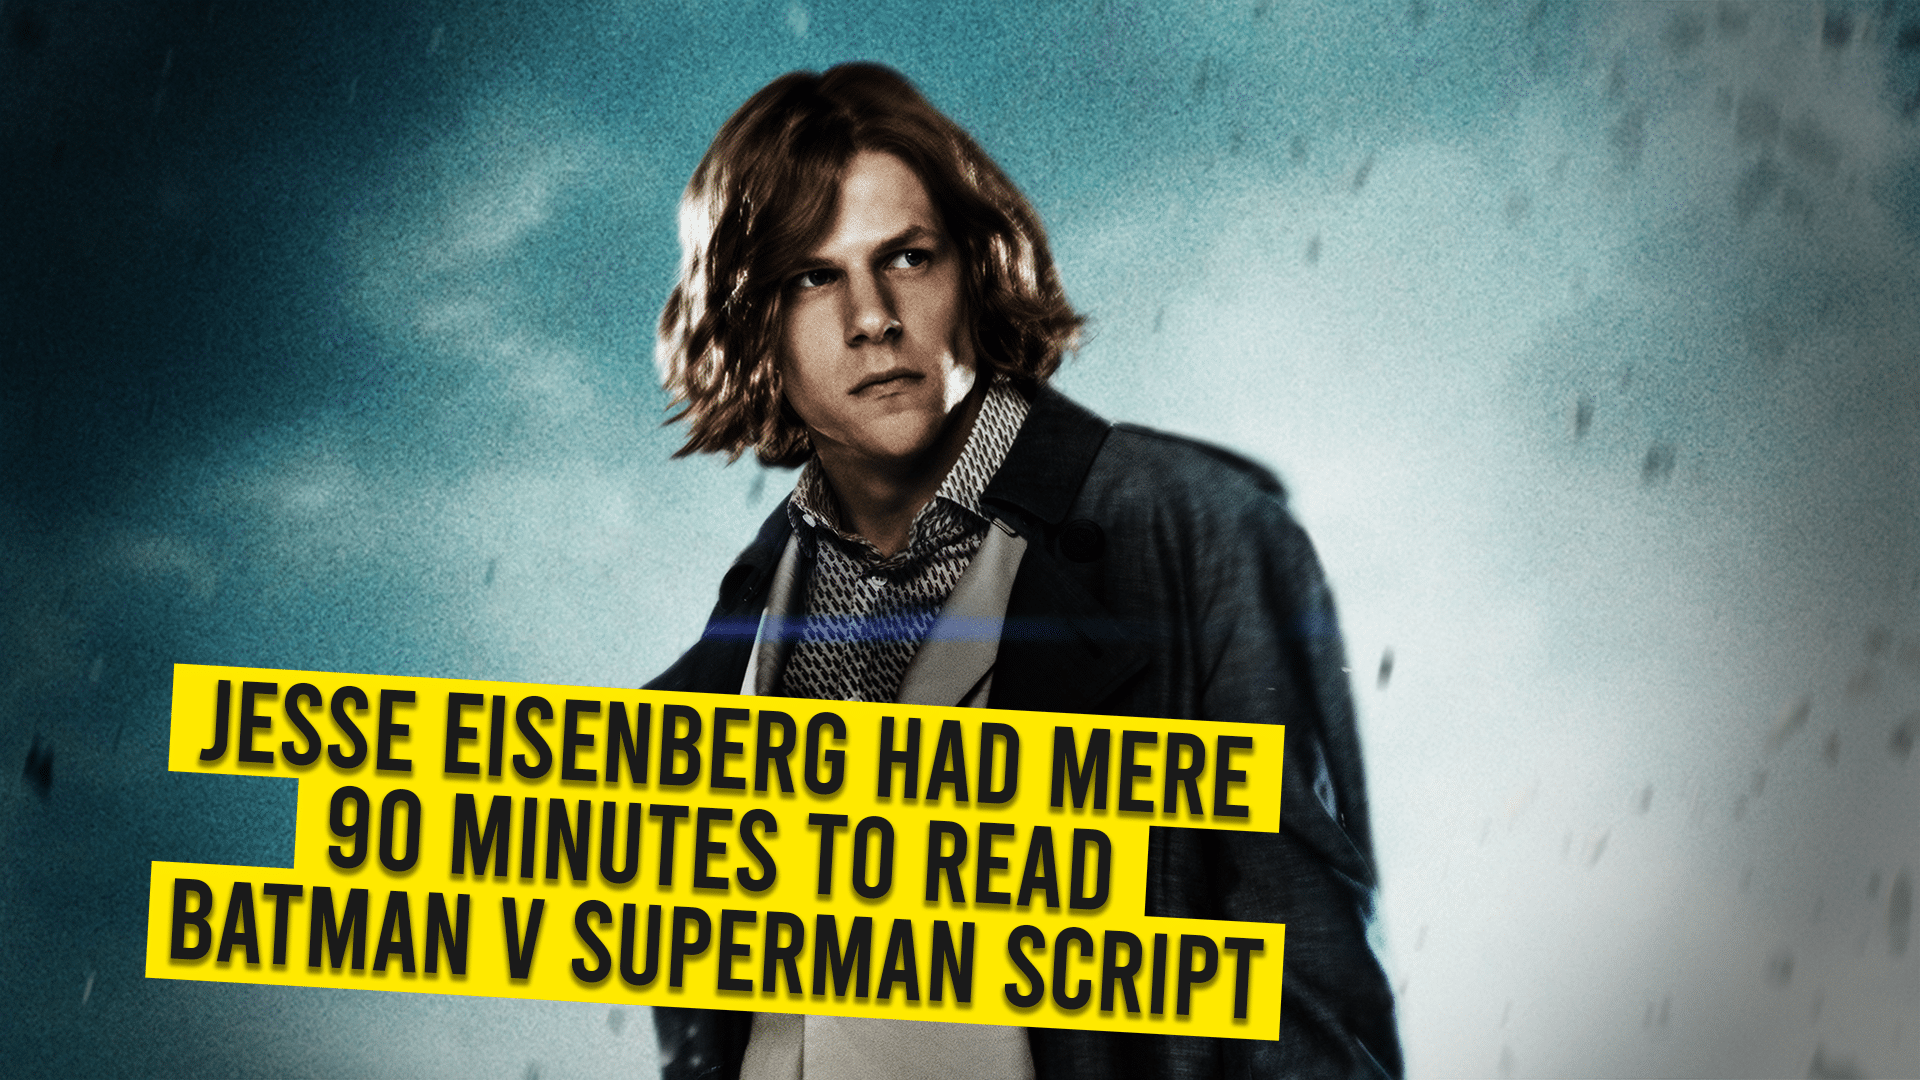 Jesse Eisenberg Had Mere 90 Minutes To Read Batman V Superman Script